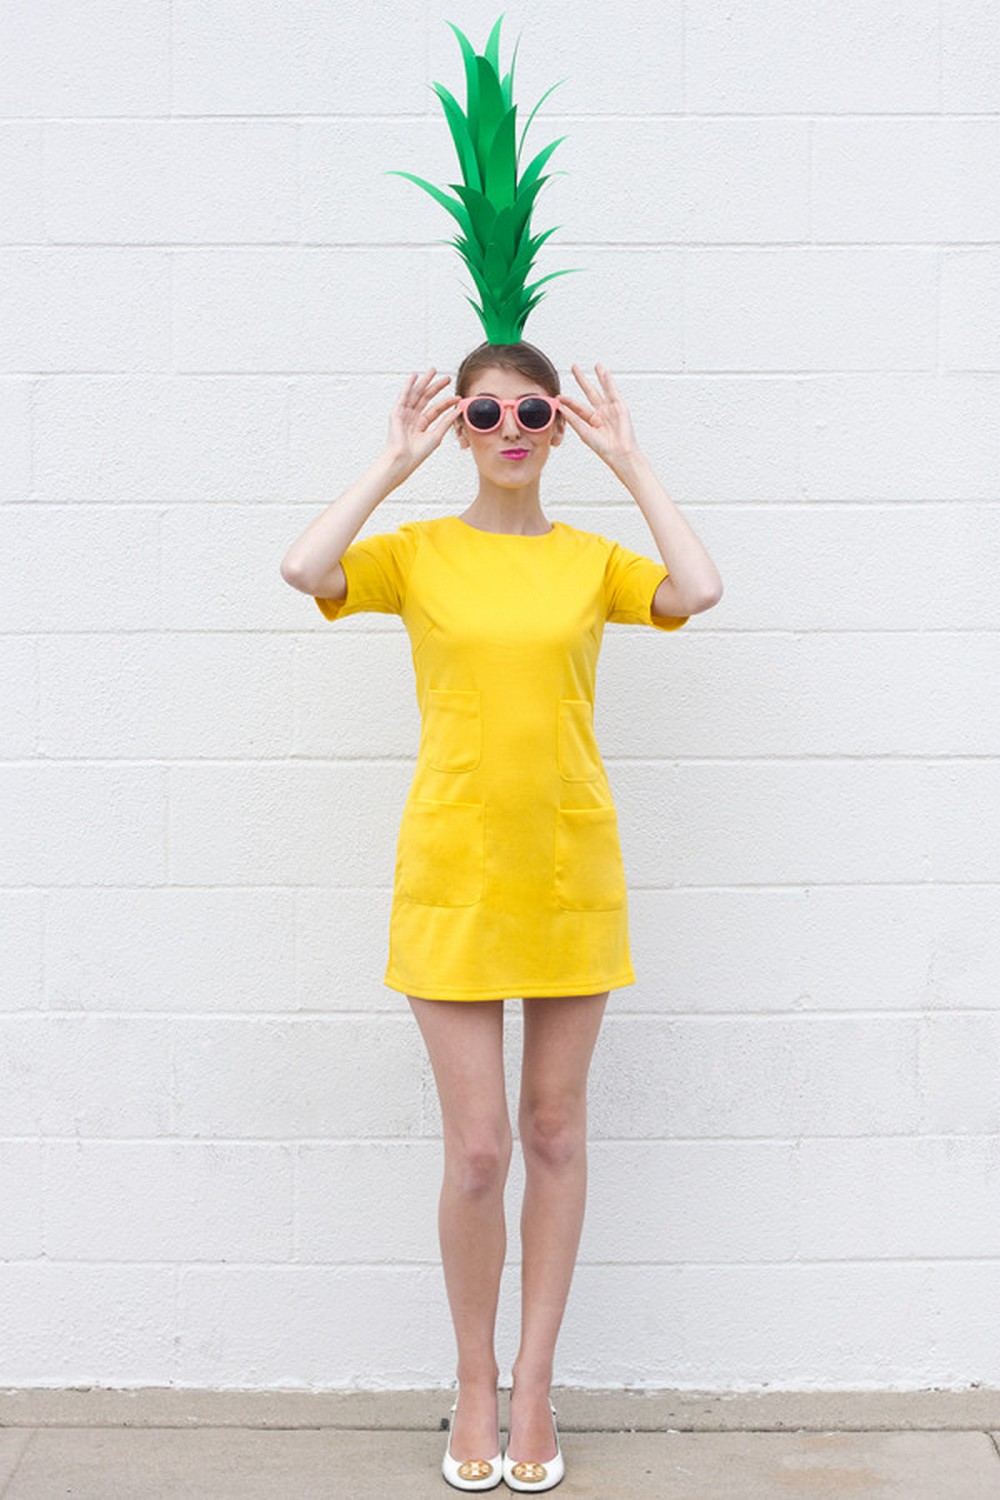 DIY Pineapple Costume With Headband